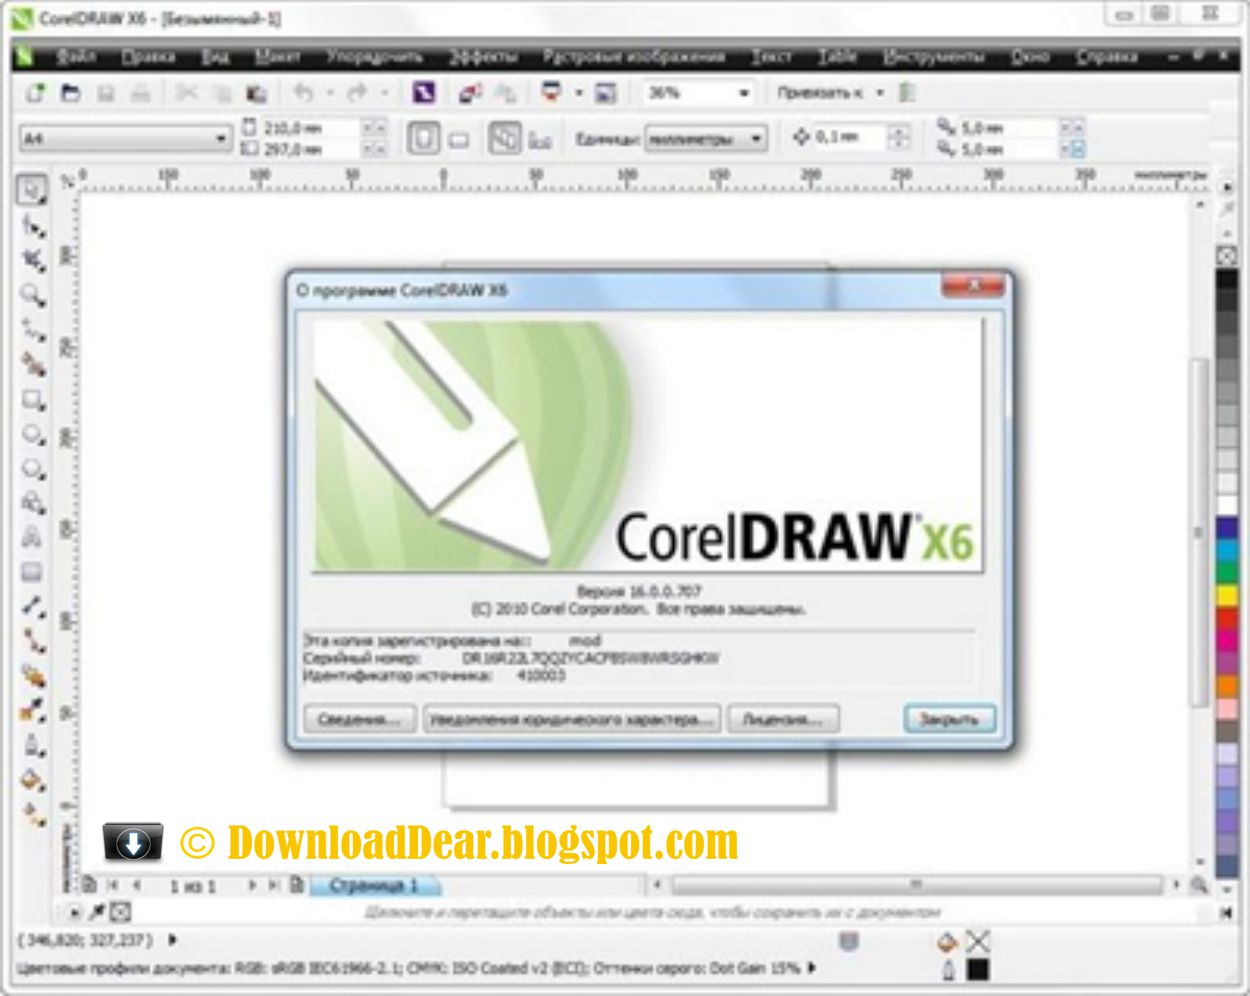 coreldraw graphics suite x6 key